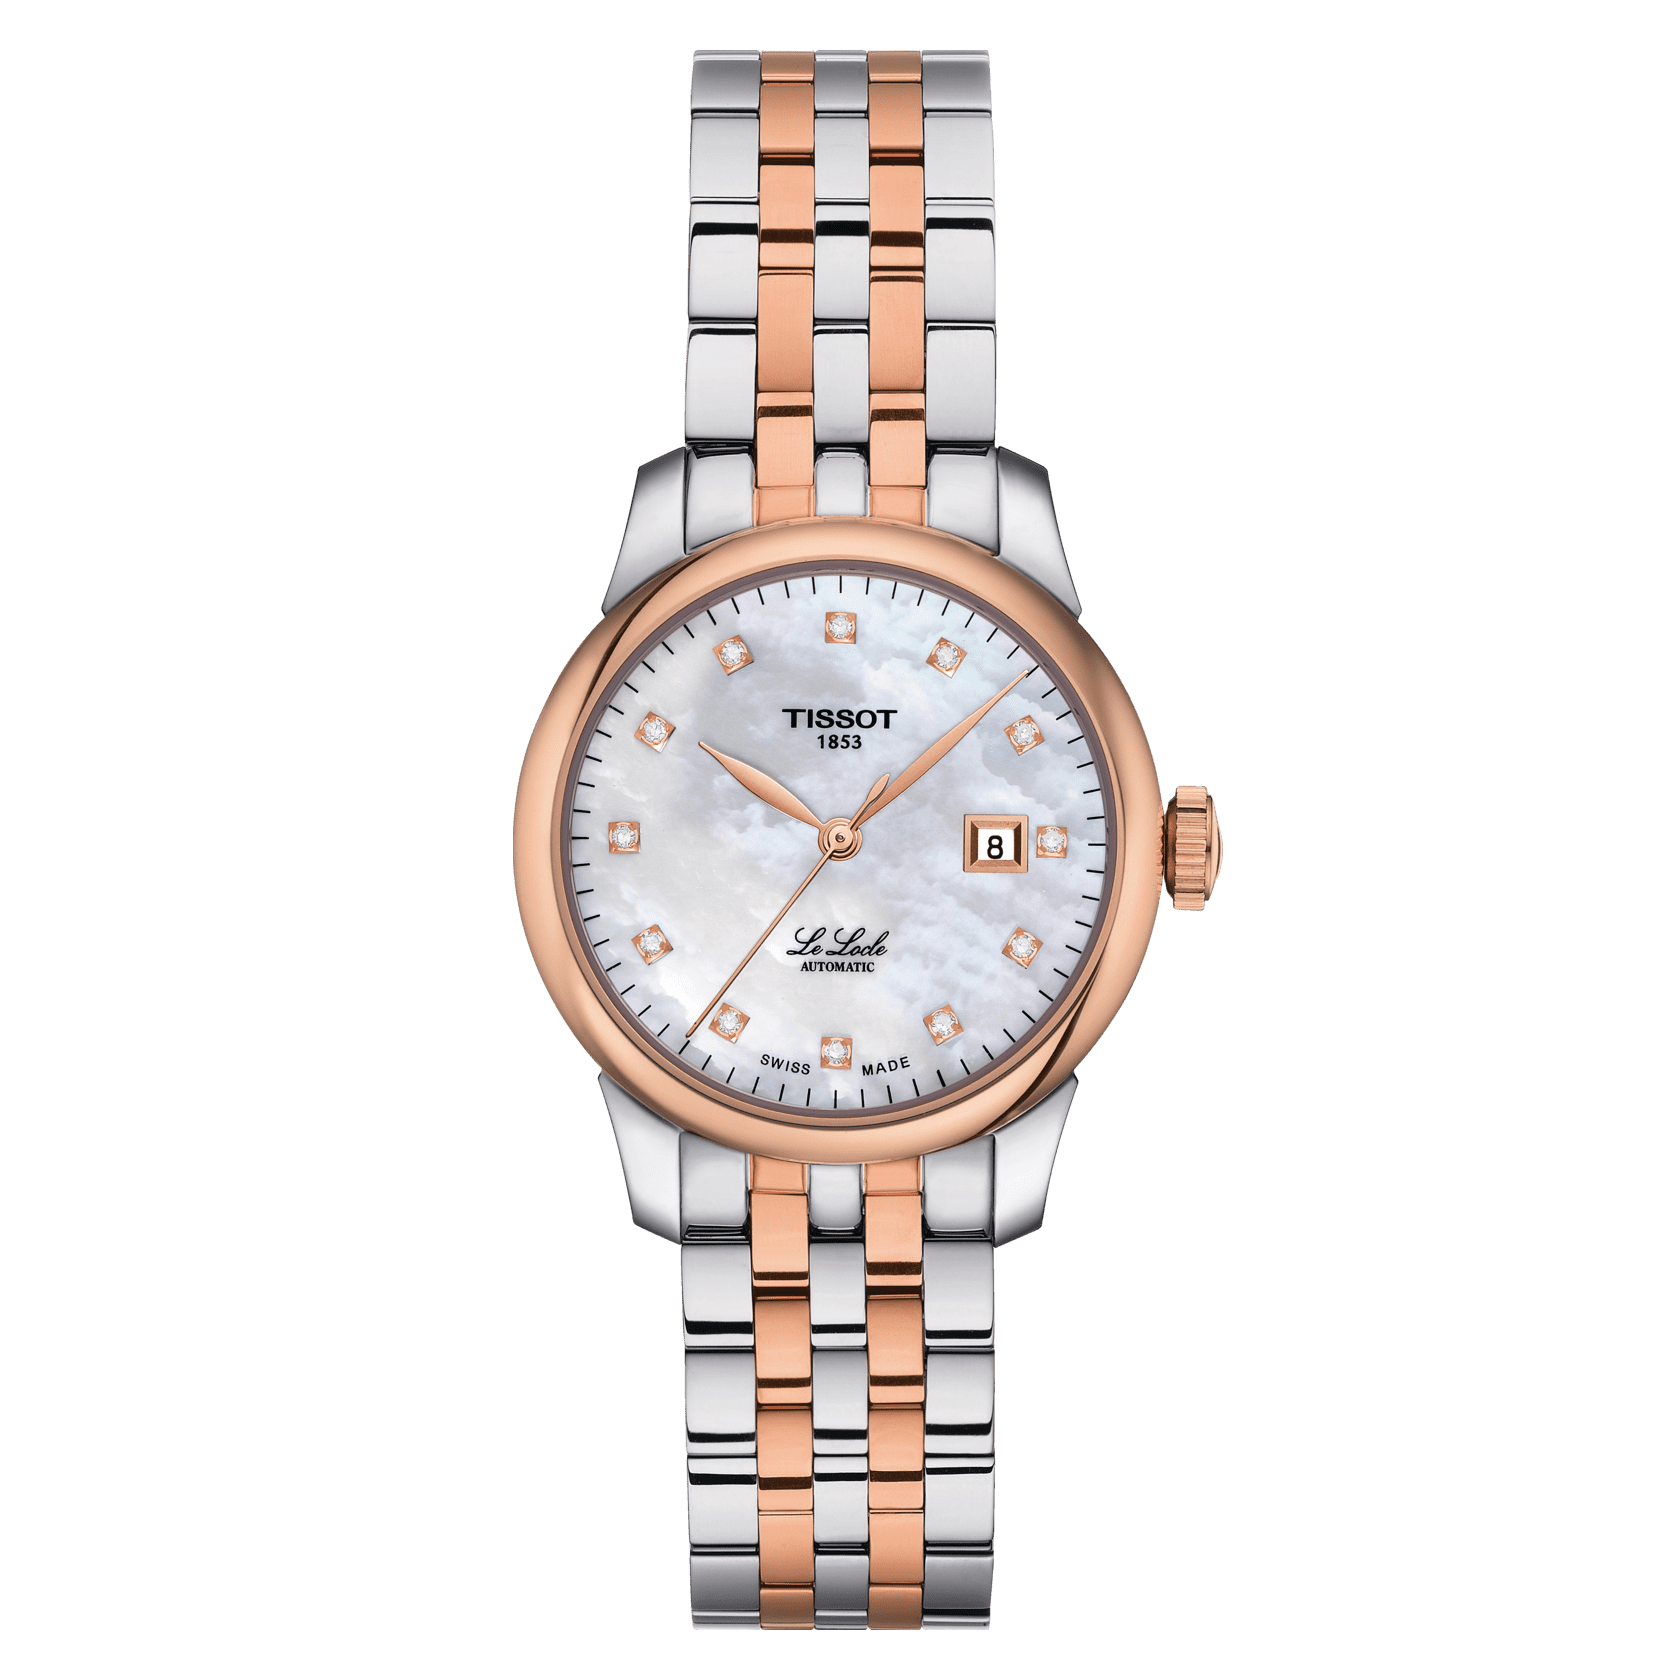 Luxury Replica Watches Usa